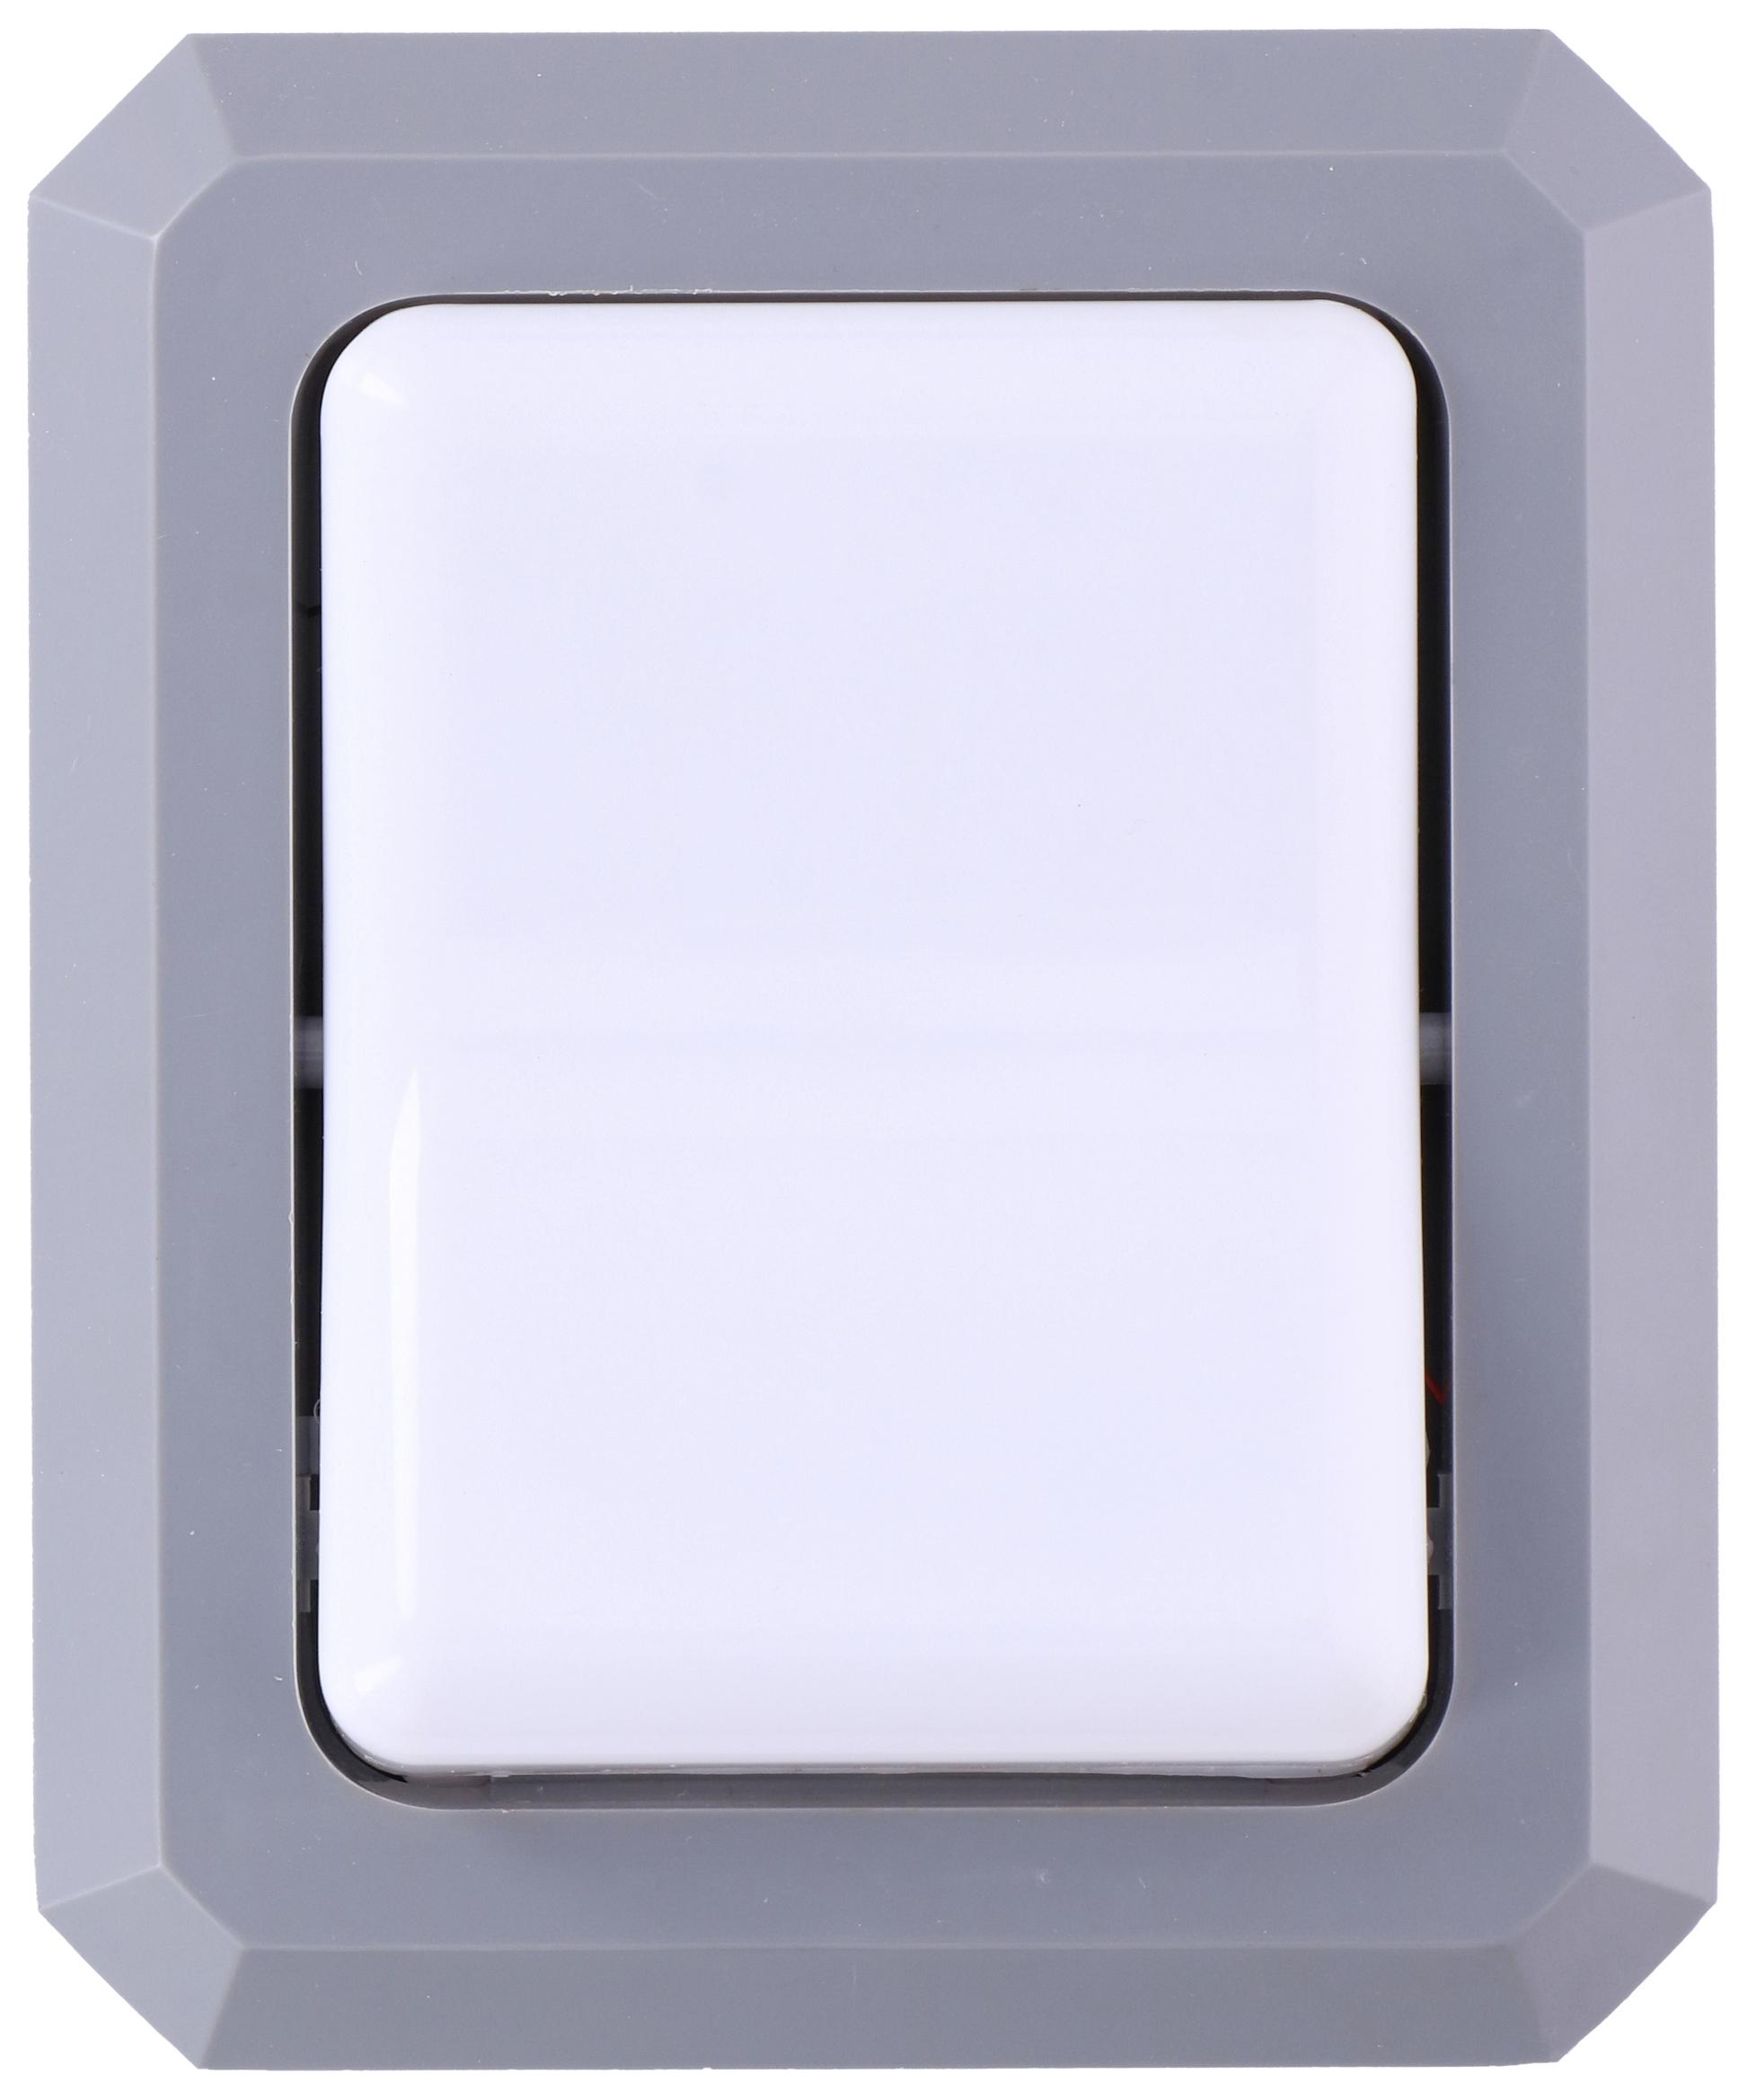 LED-Wandleuchte Jumbo in Grau - Grau, Kunststoff (18/14/4cm)